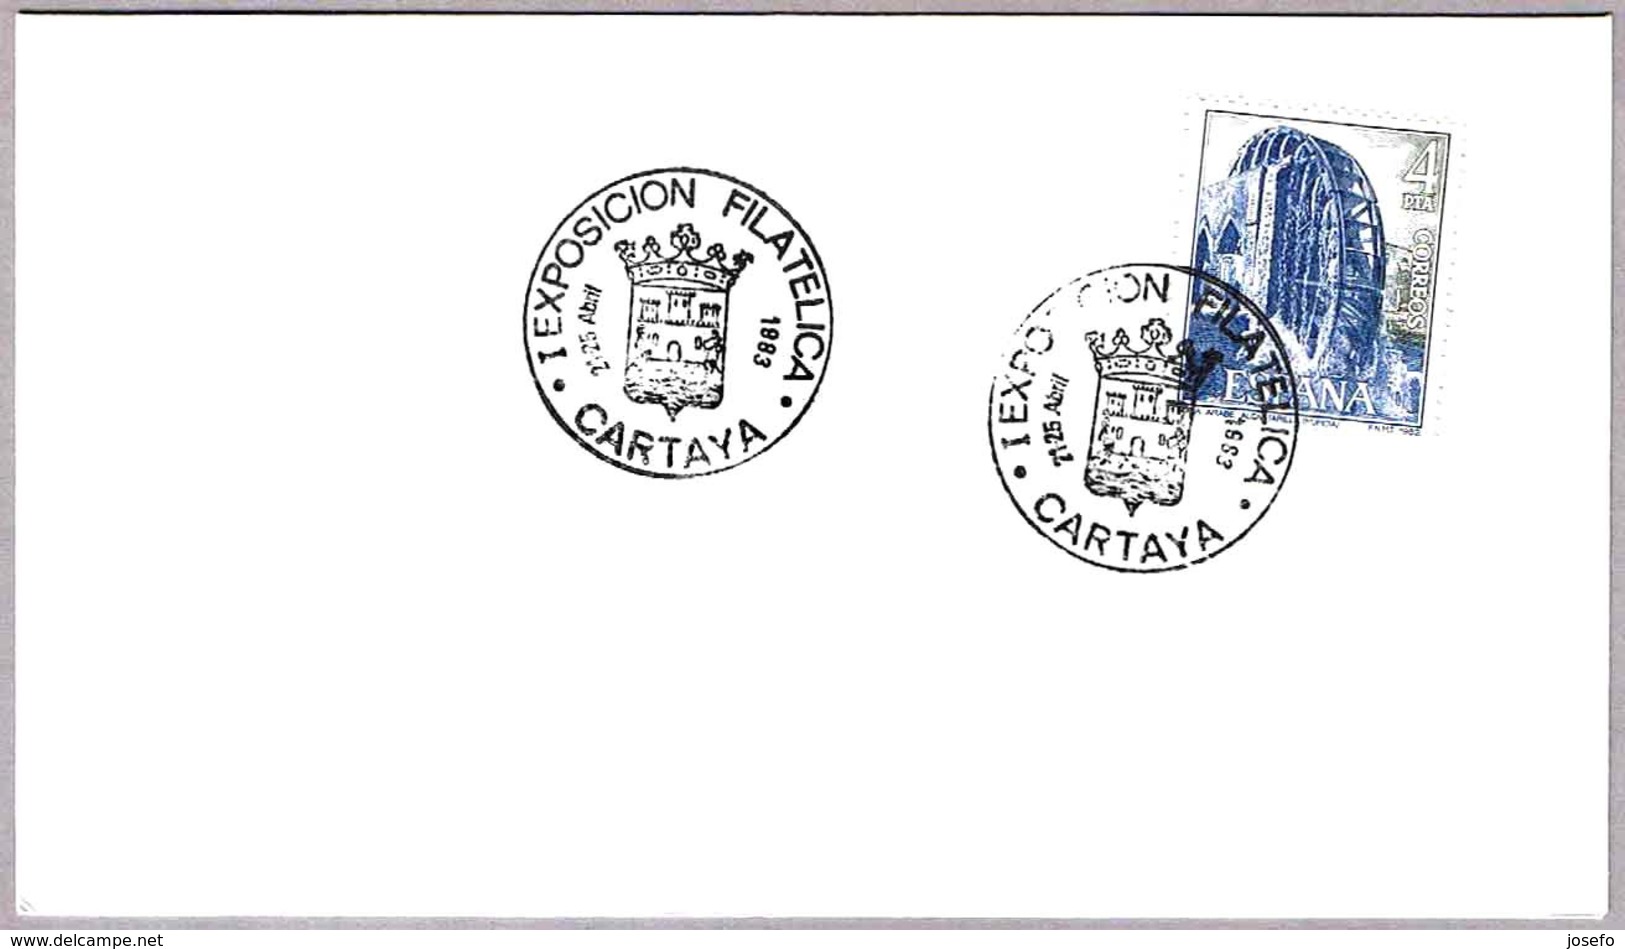 Matasellos I EXP. FILATELICA - CARTAYA, Huelva, Andalucia, 1983 - Briefe U. Dokumente